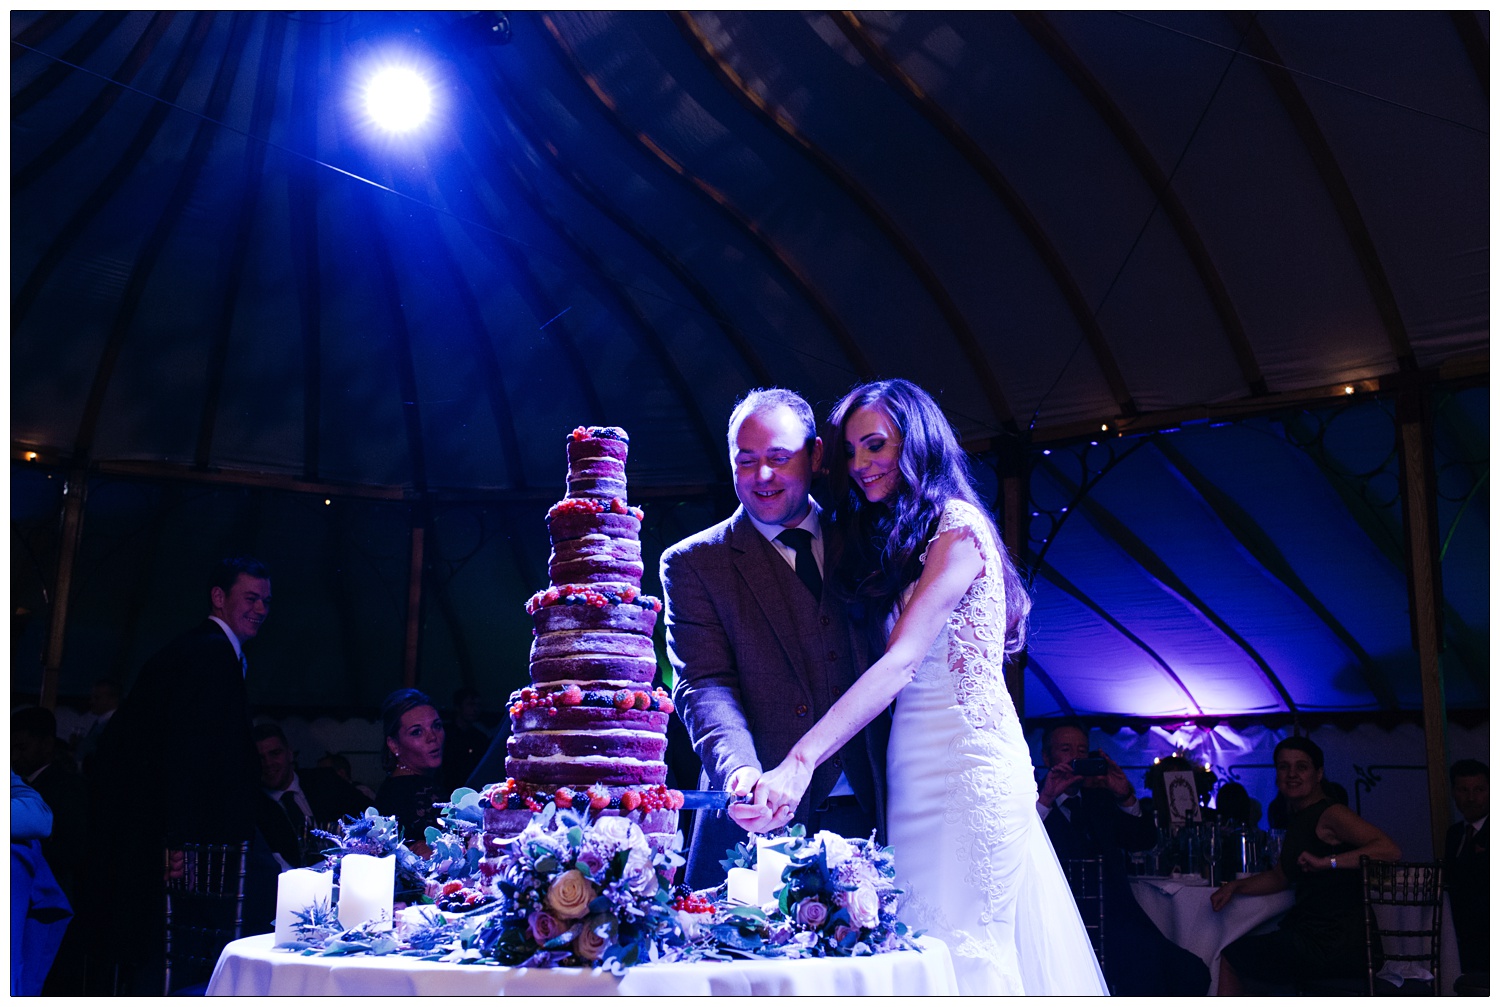 The bride and groom cut their very tall wedding cake, under a blue spotlight.